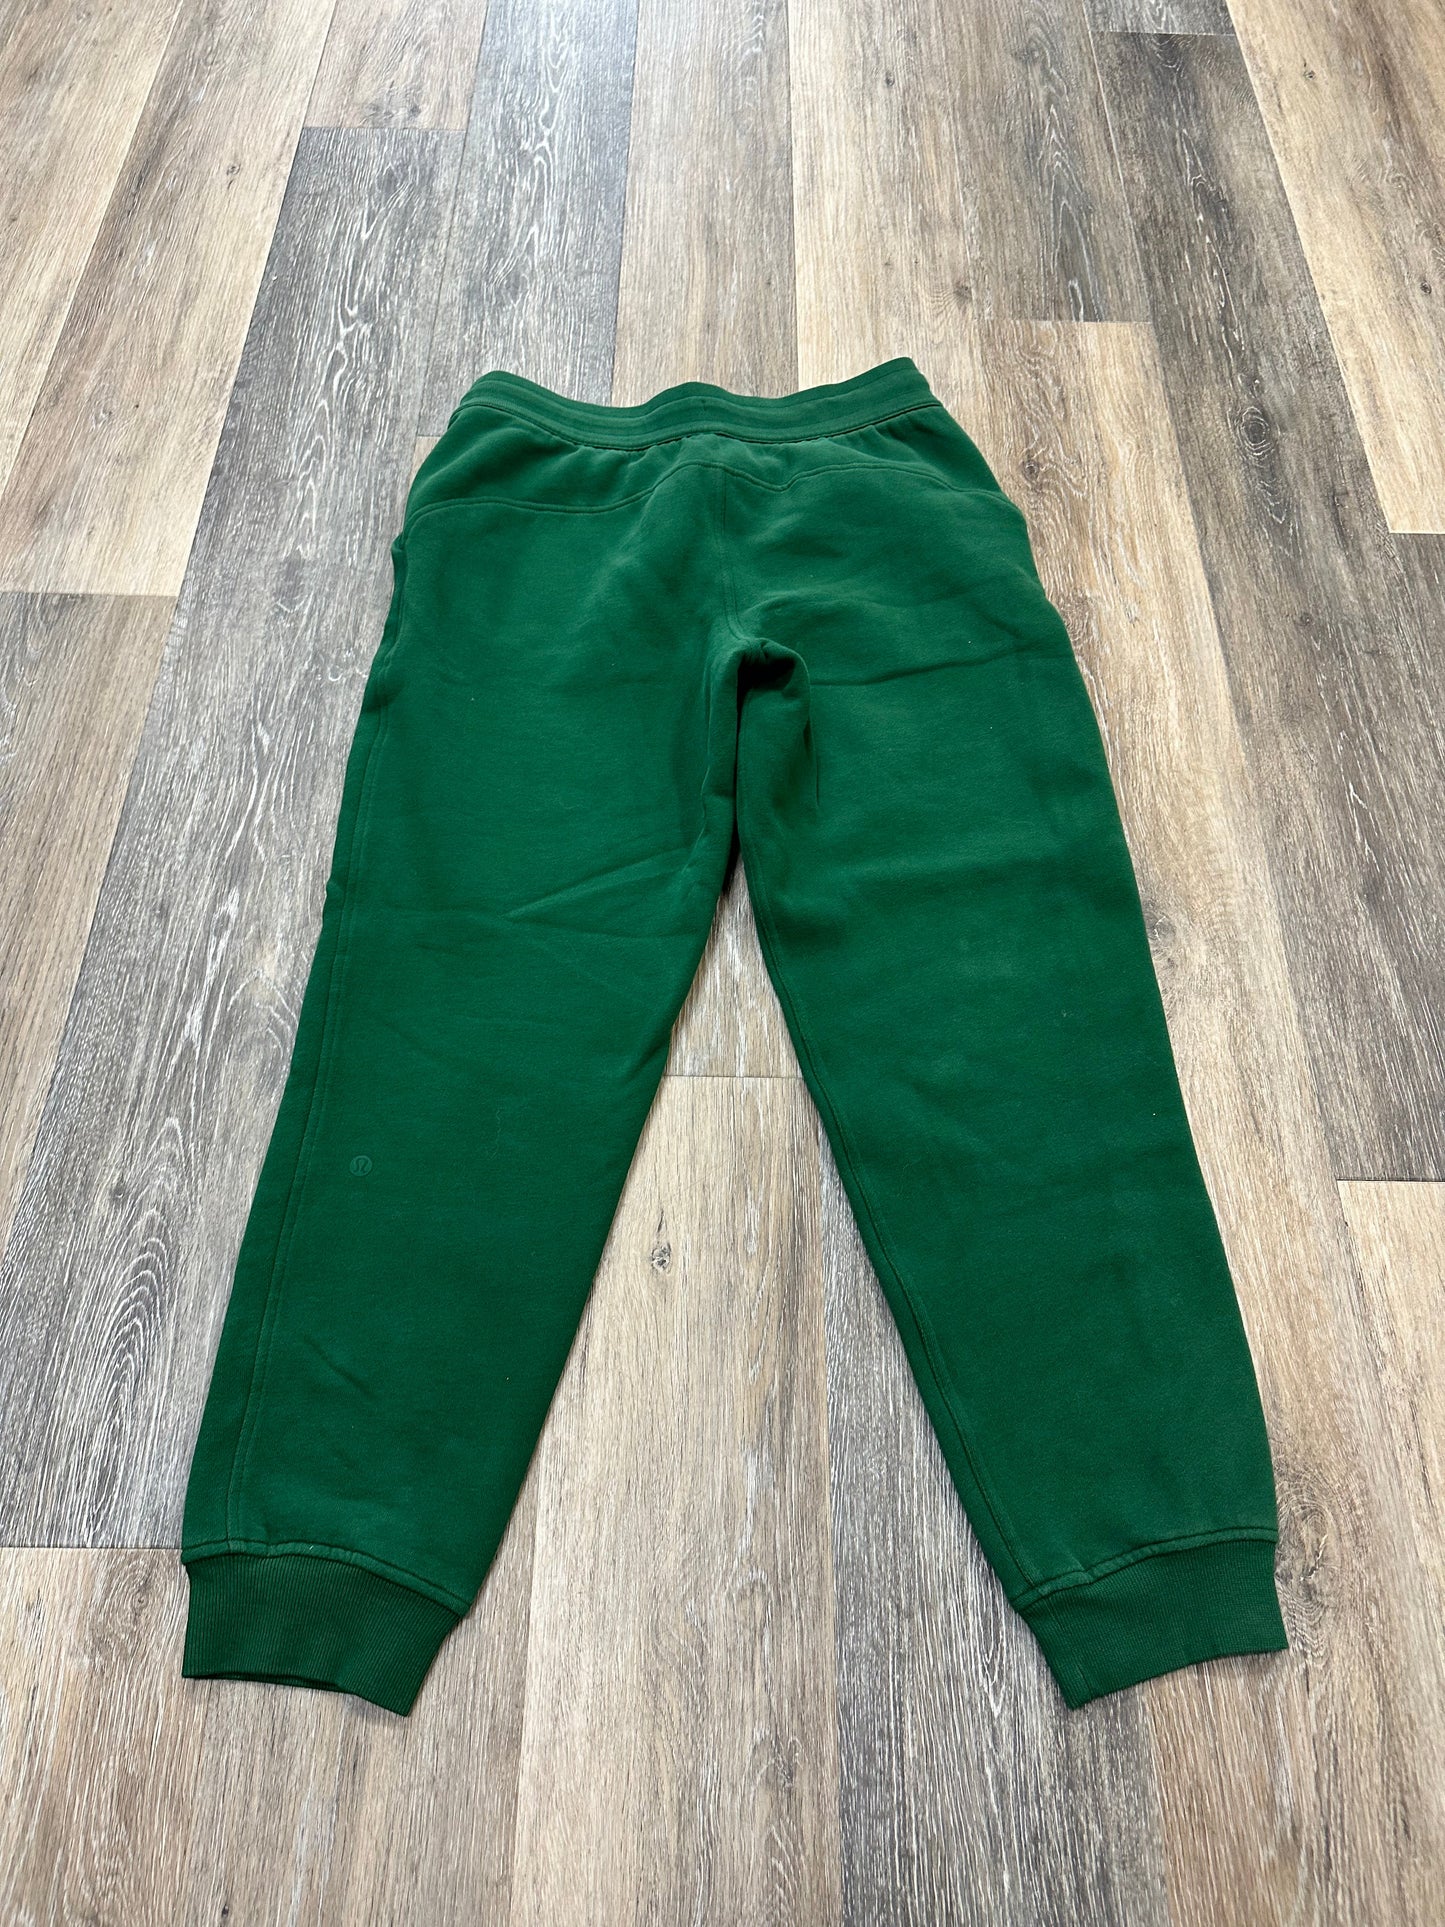 Green Athletic Pants Lululemon, Size 8